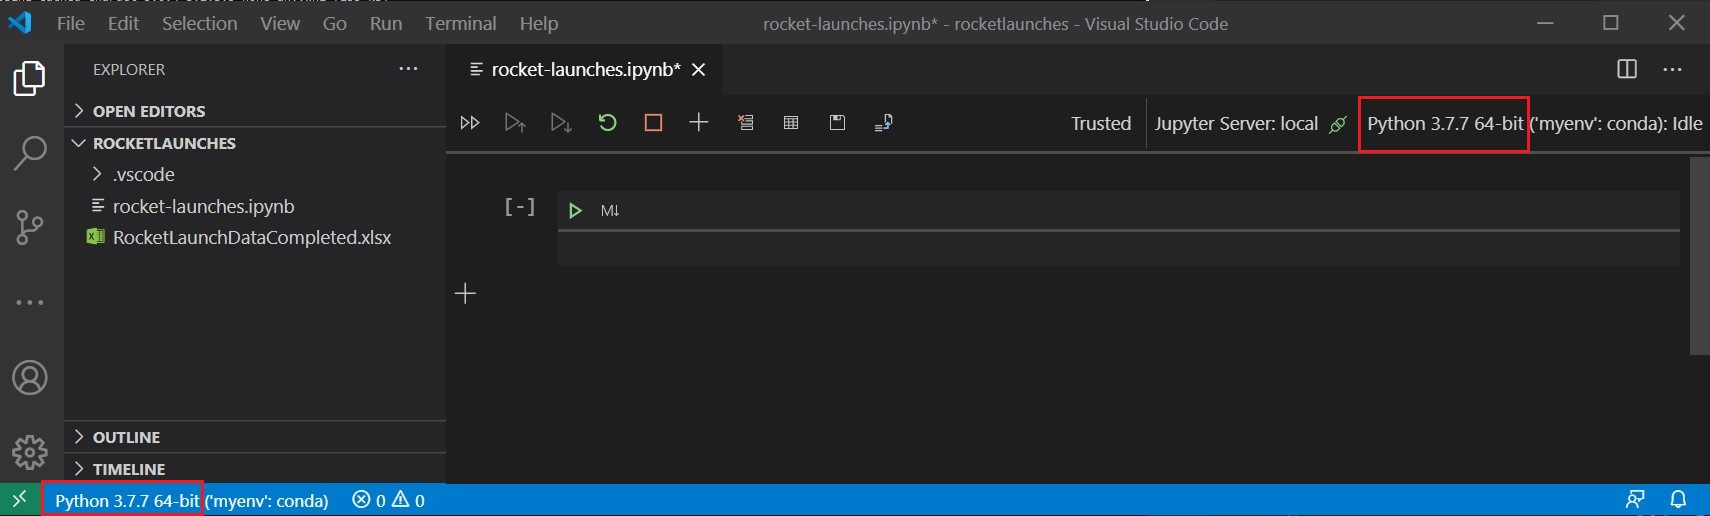 Screenshot that shows Visual Studio Code with the Anaconda environment.